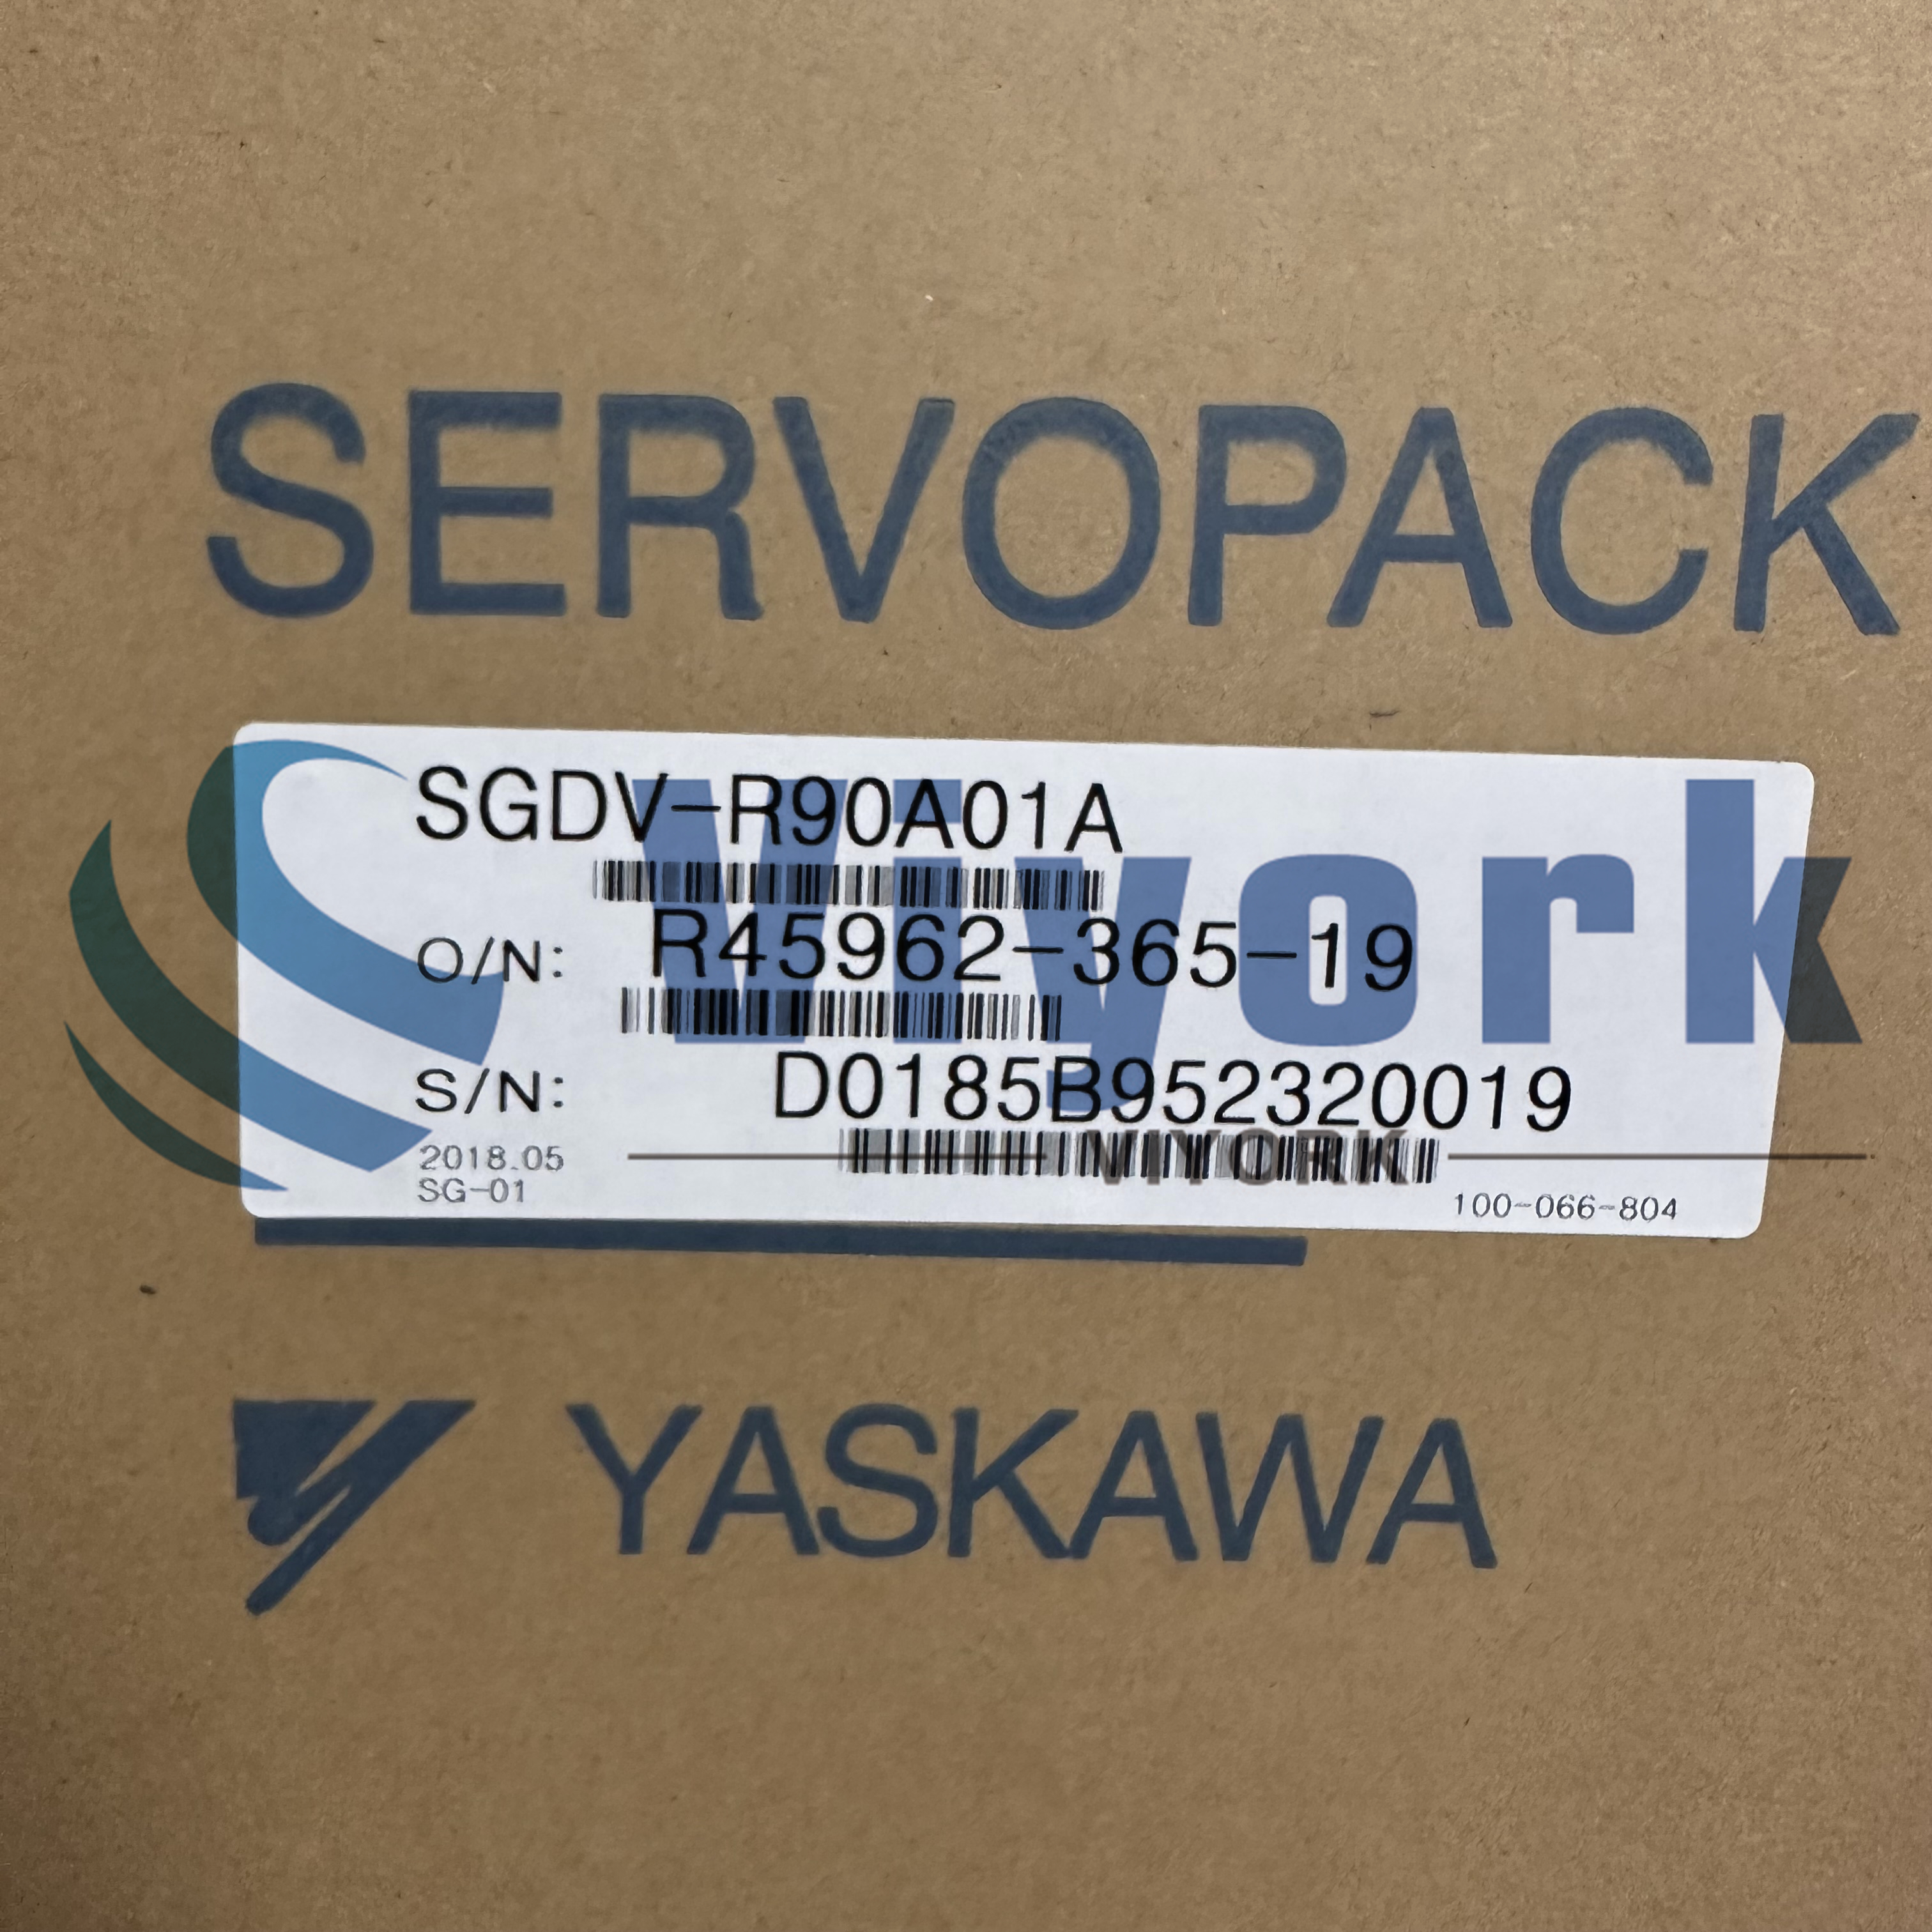 Yaskawa SGDV-R90A01A SERVO DRIVE 0.5AMP 200-230V 50/60HZ SERVOPACK NEW